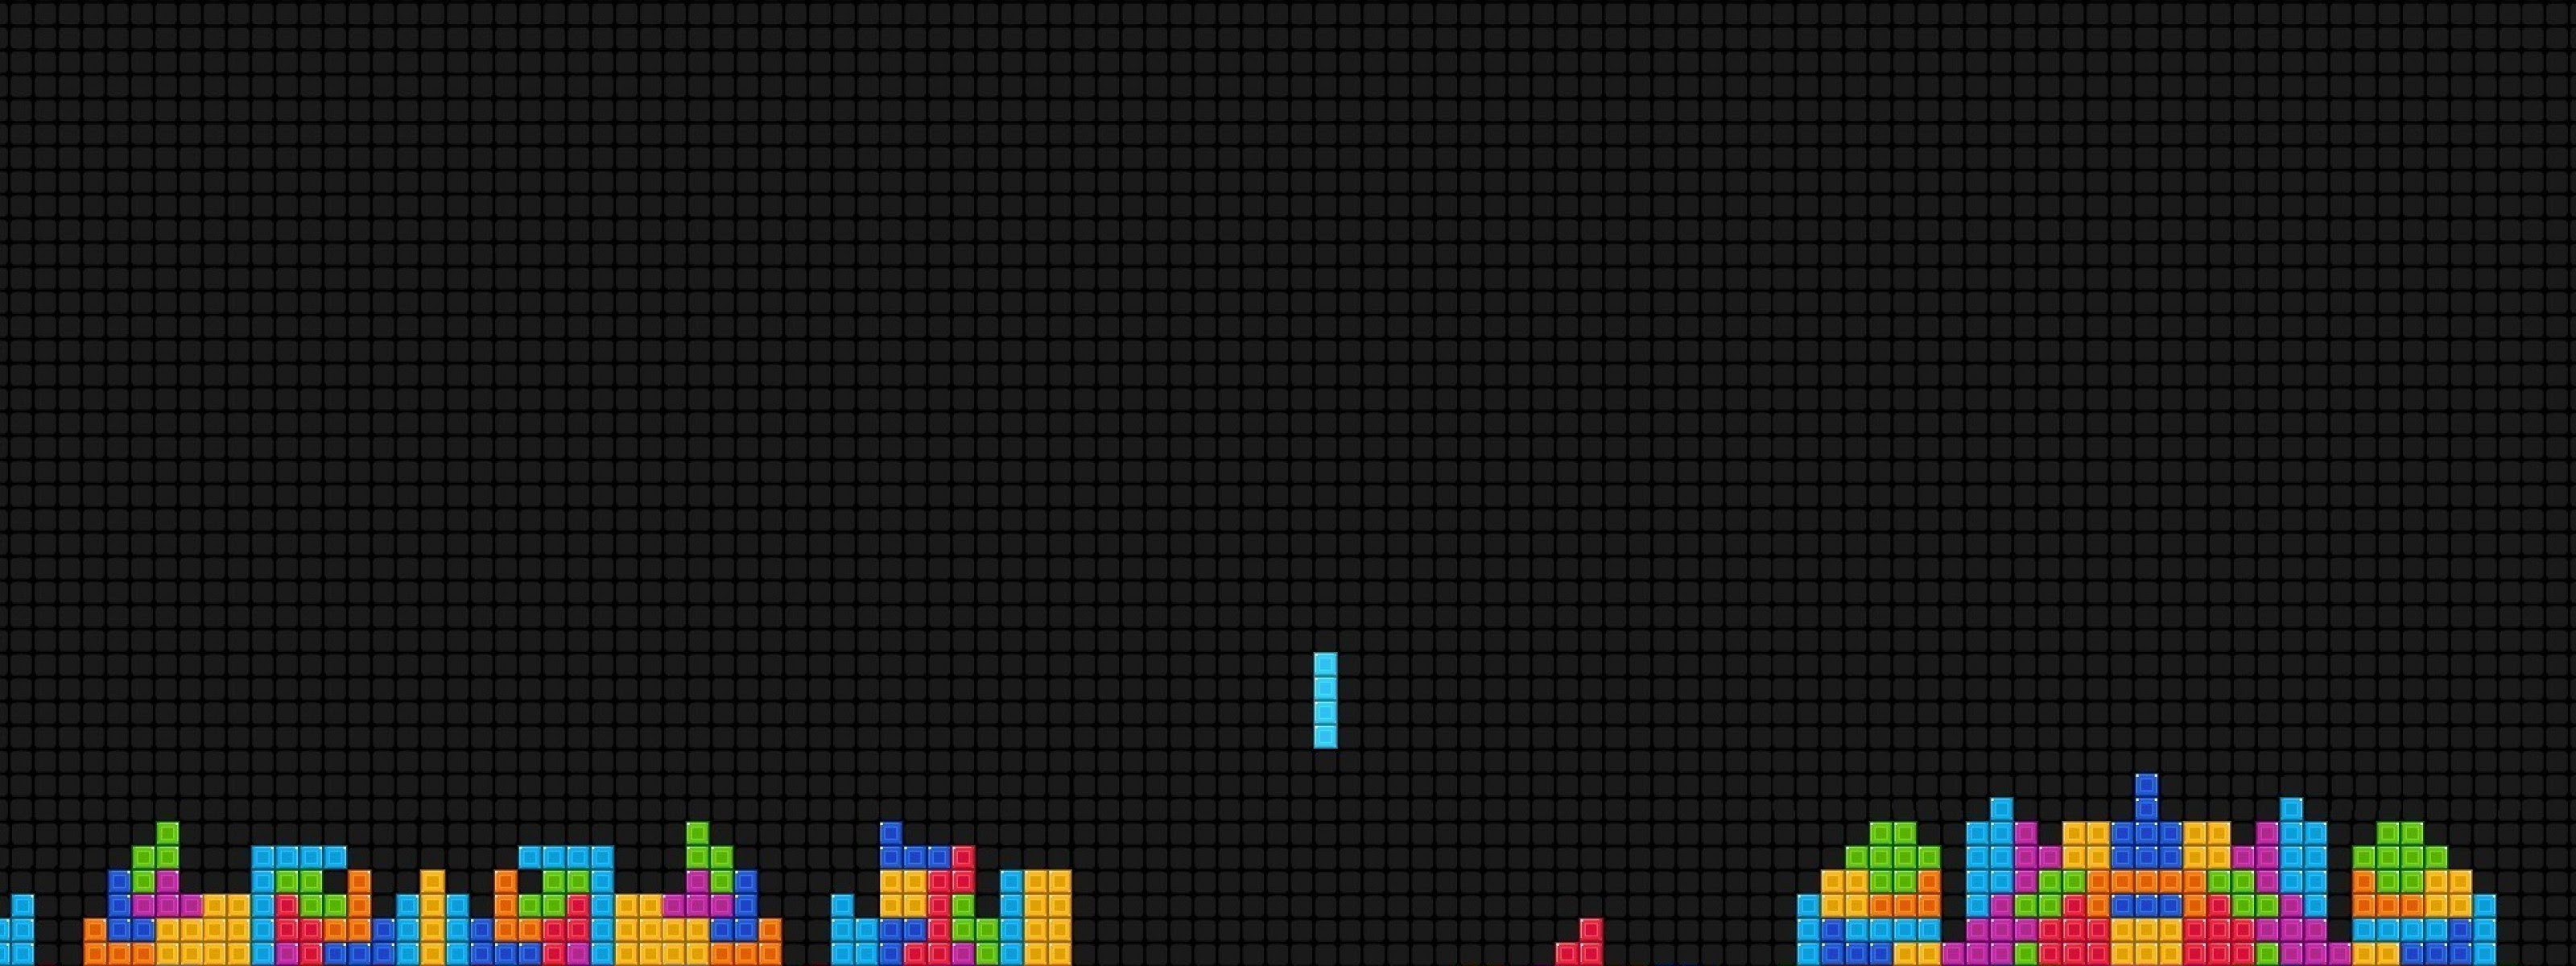 Tetris Wallpaper - HD Wallpapers